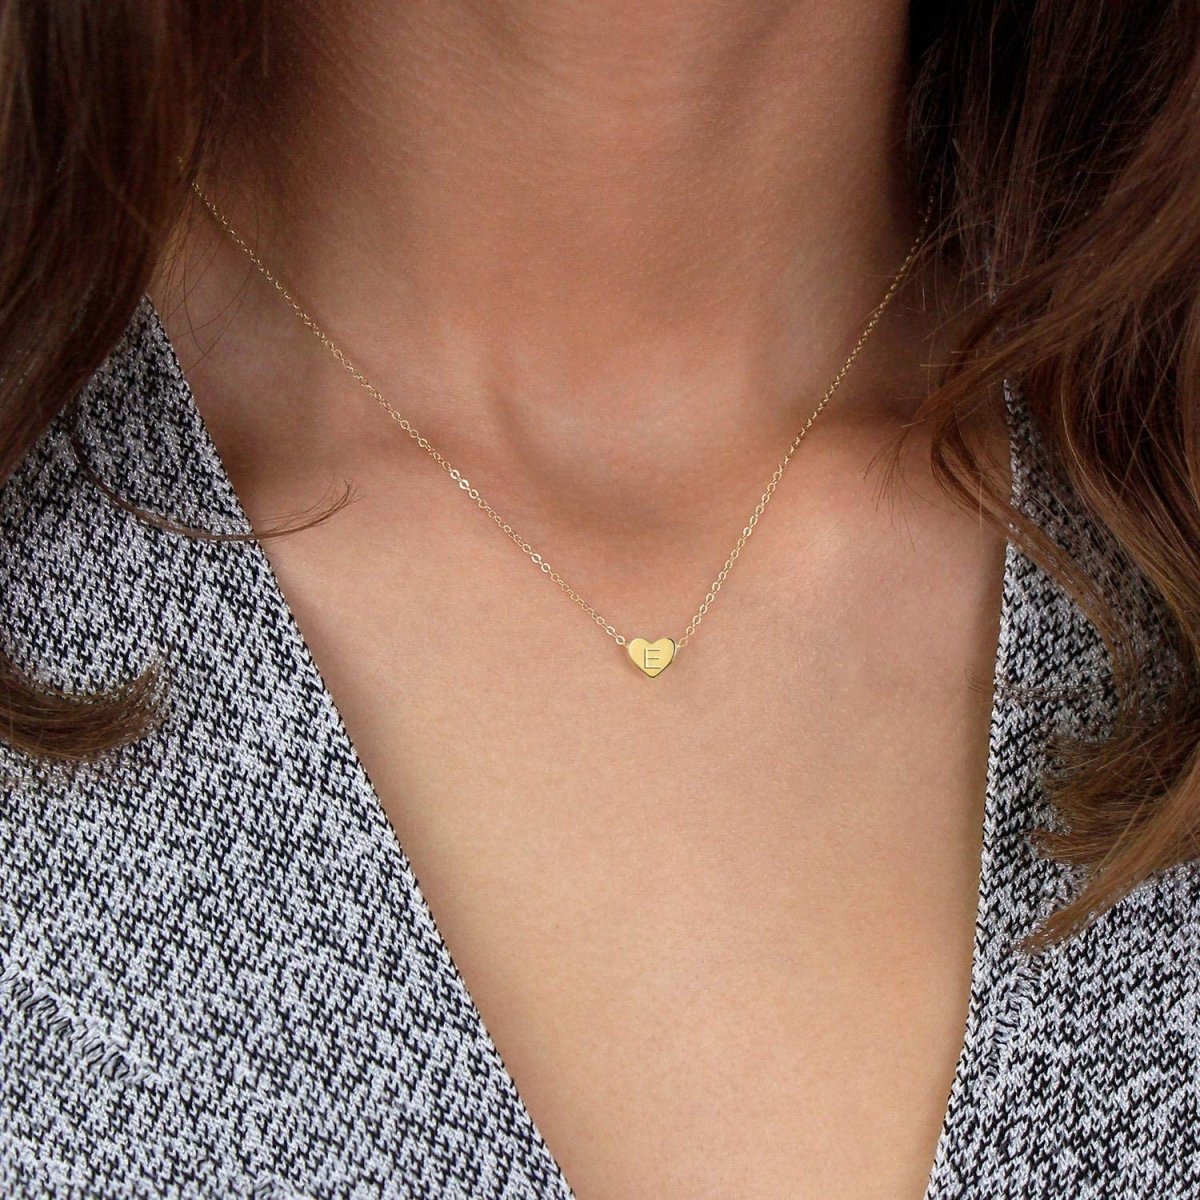 The Monogram Heart Necklace Gold - C.J.ROCKER